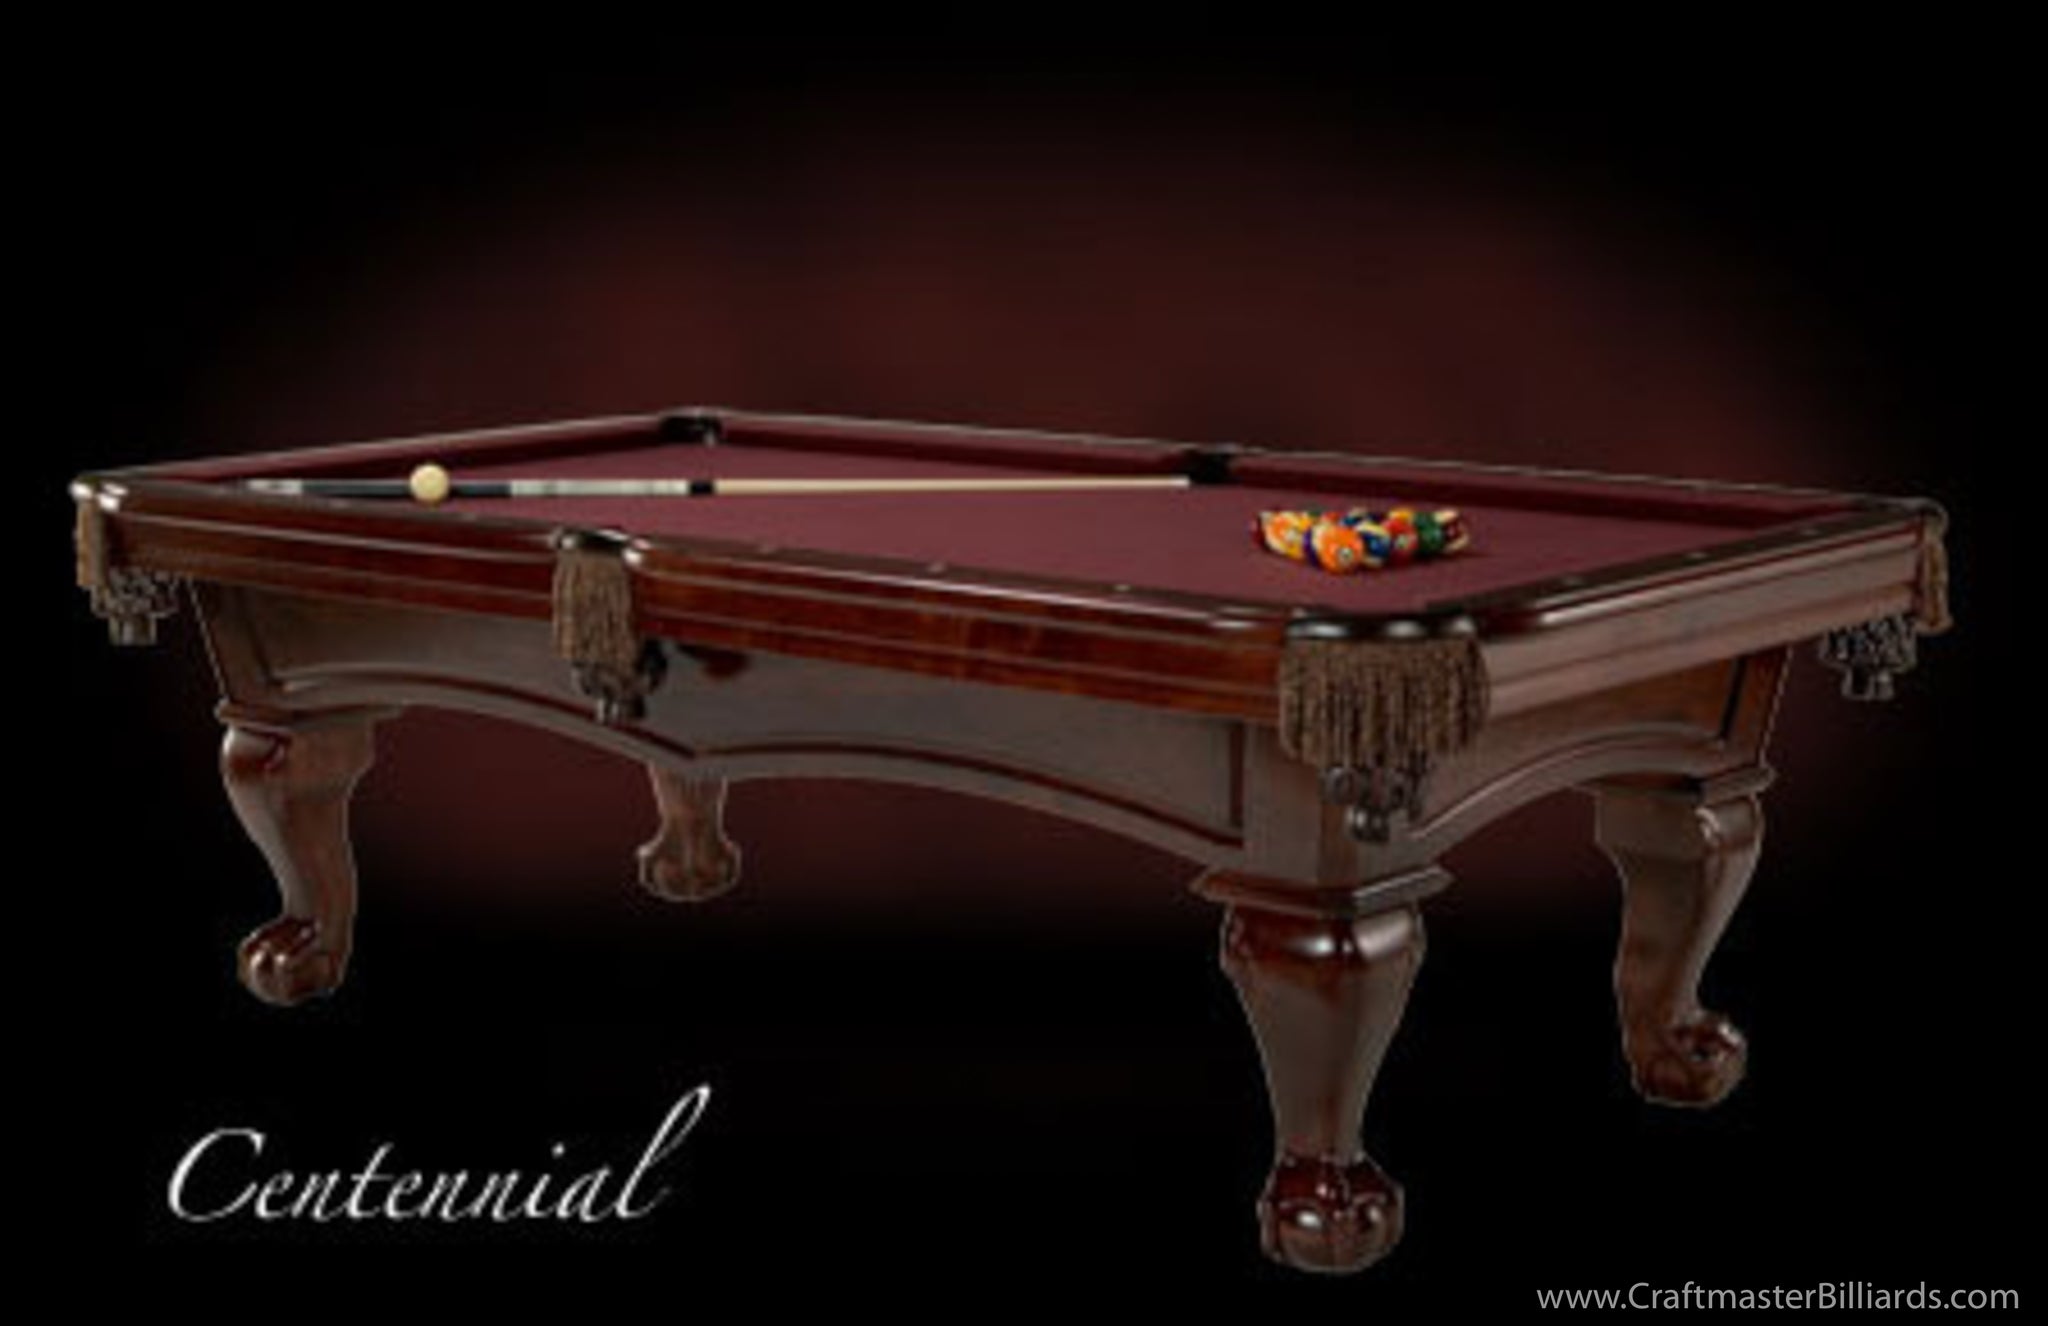 Centennial 9' Pool Table